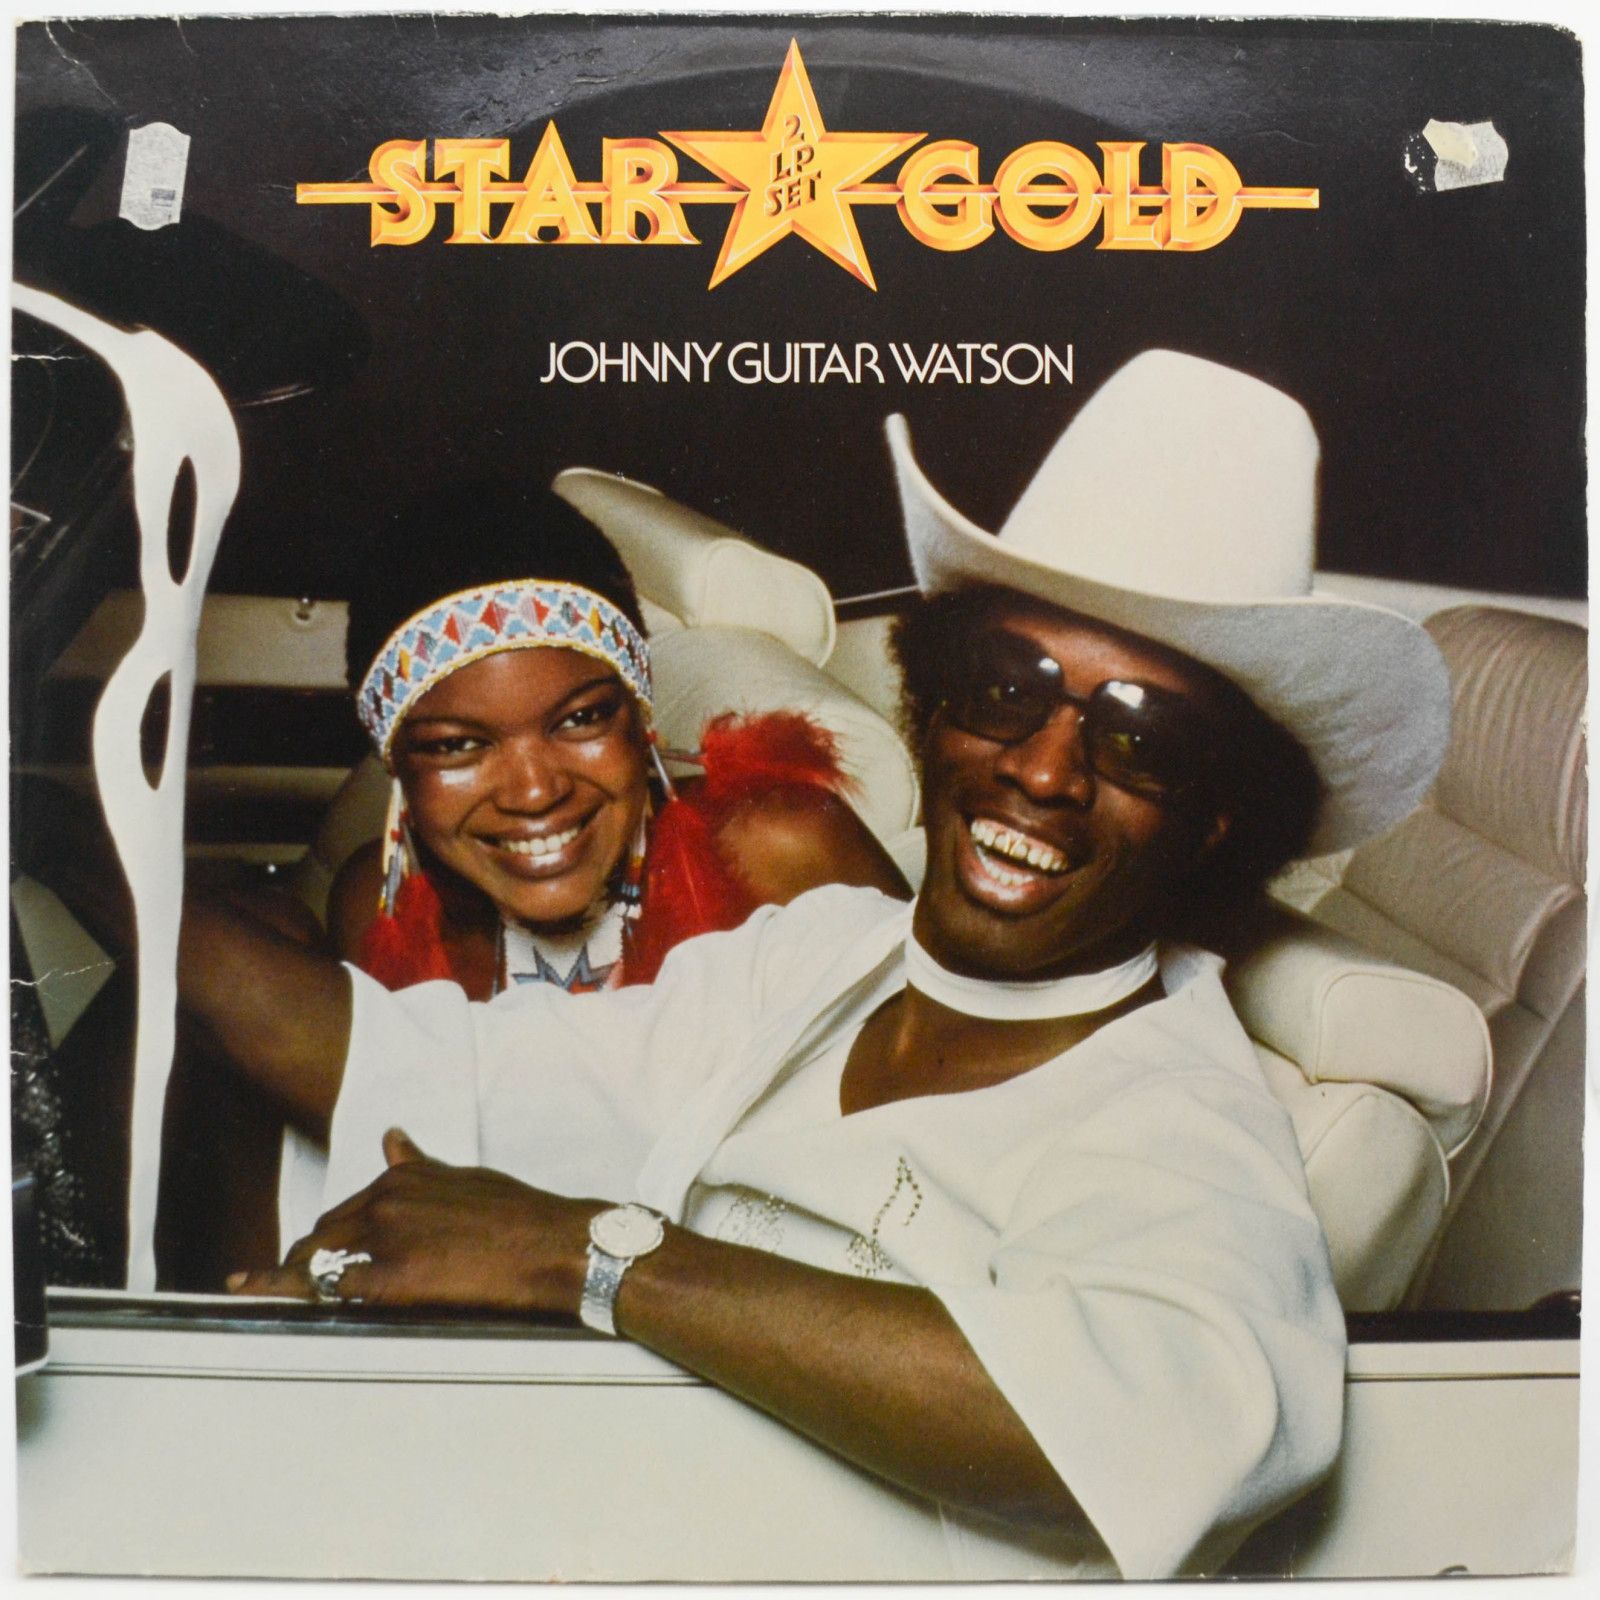 Johnny Guitar Watson — Star Gold (2LP), 1980